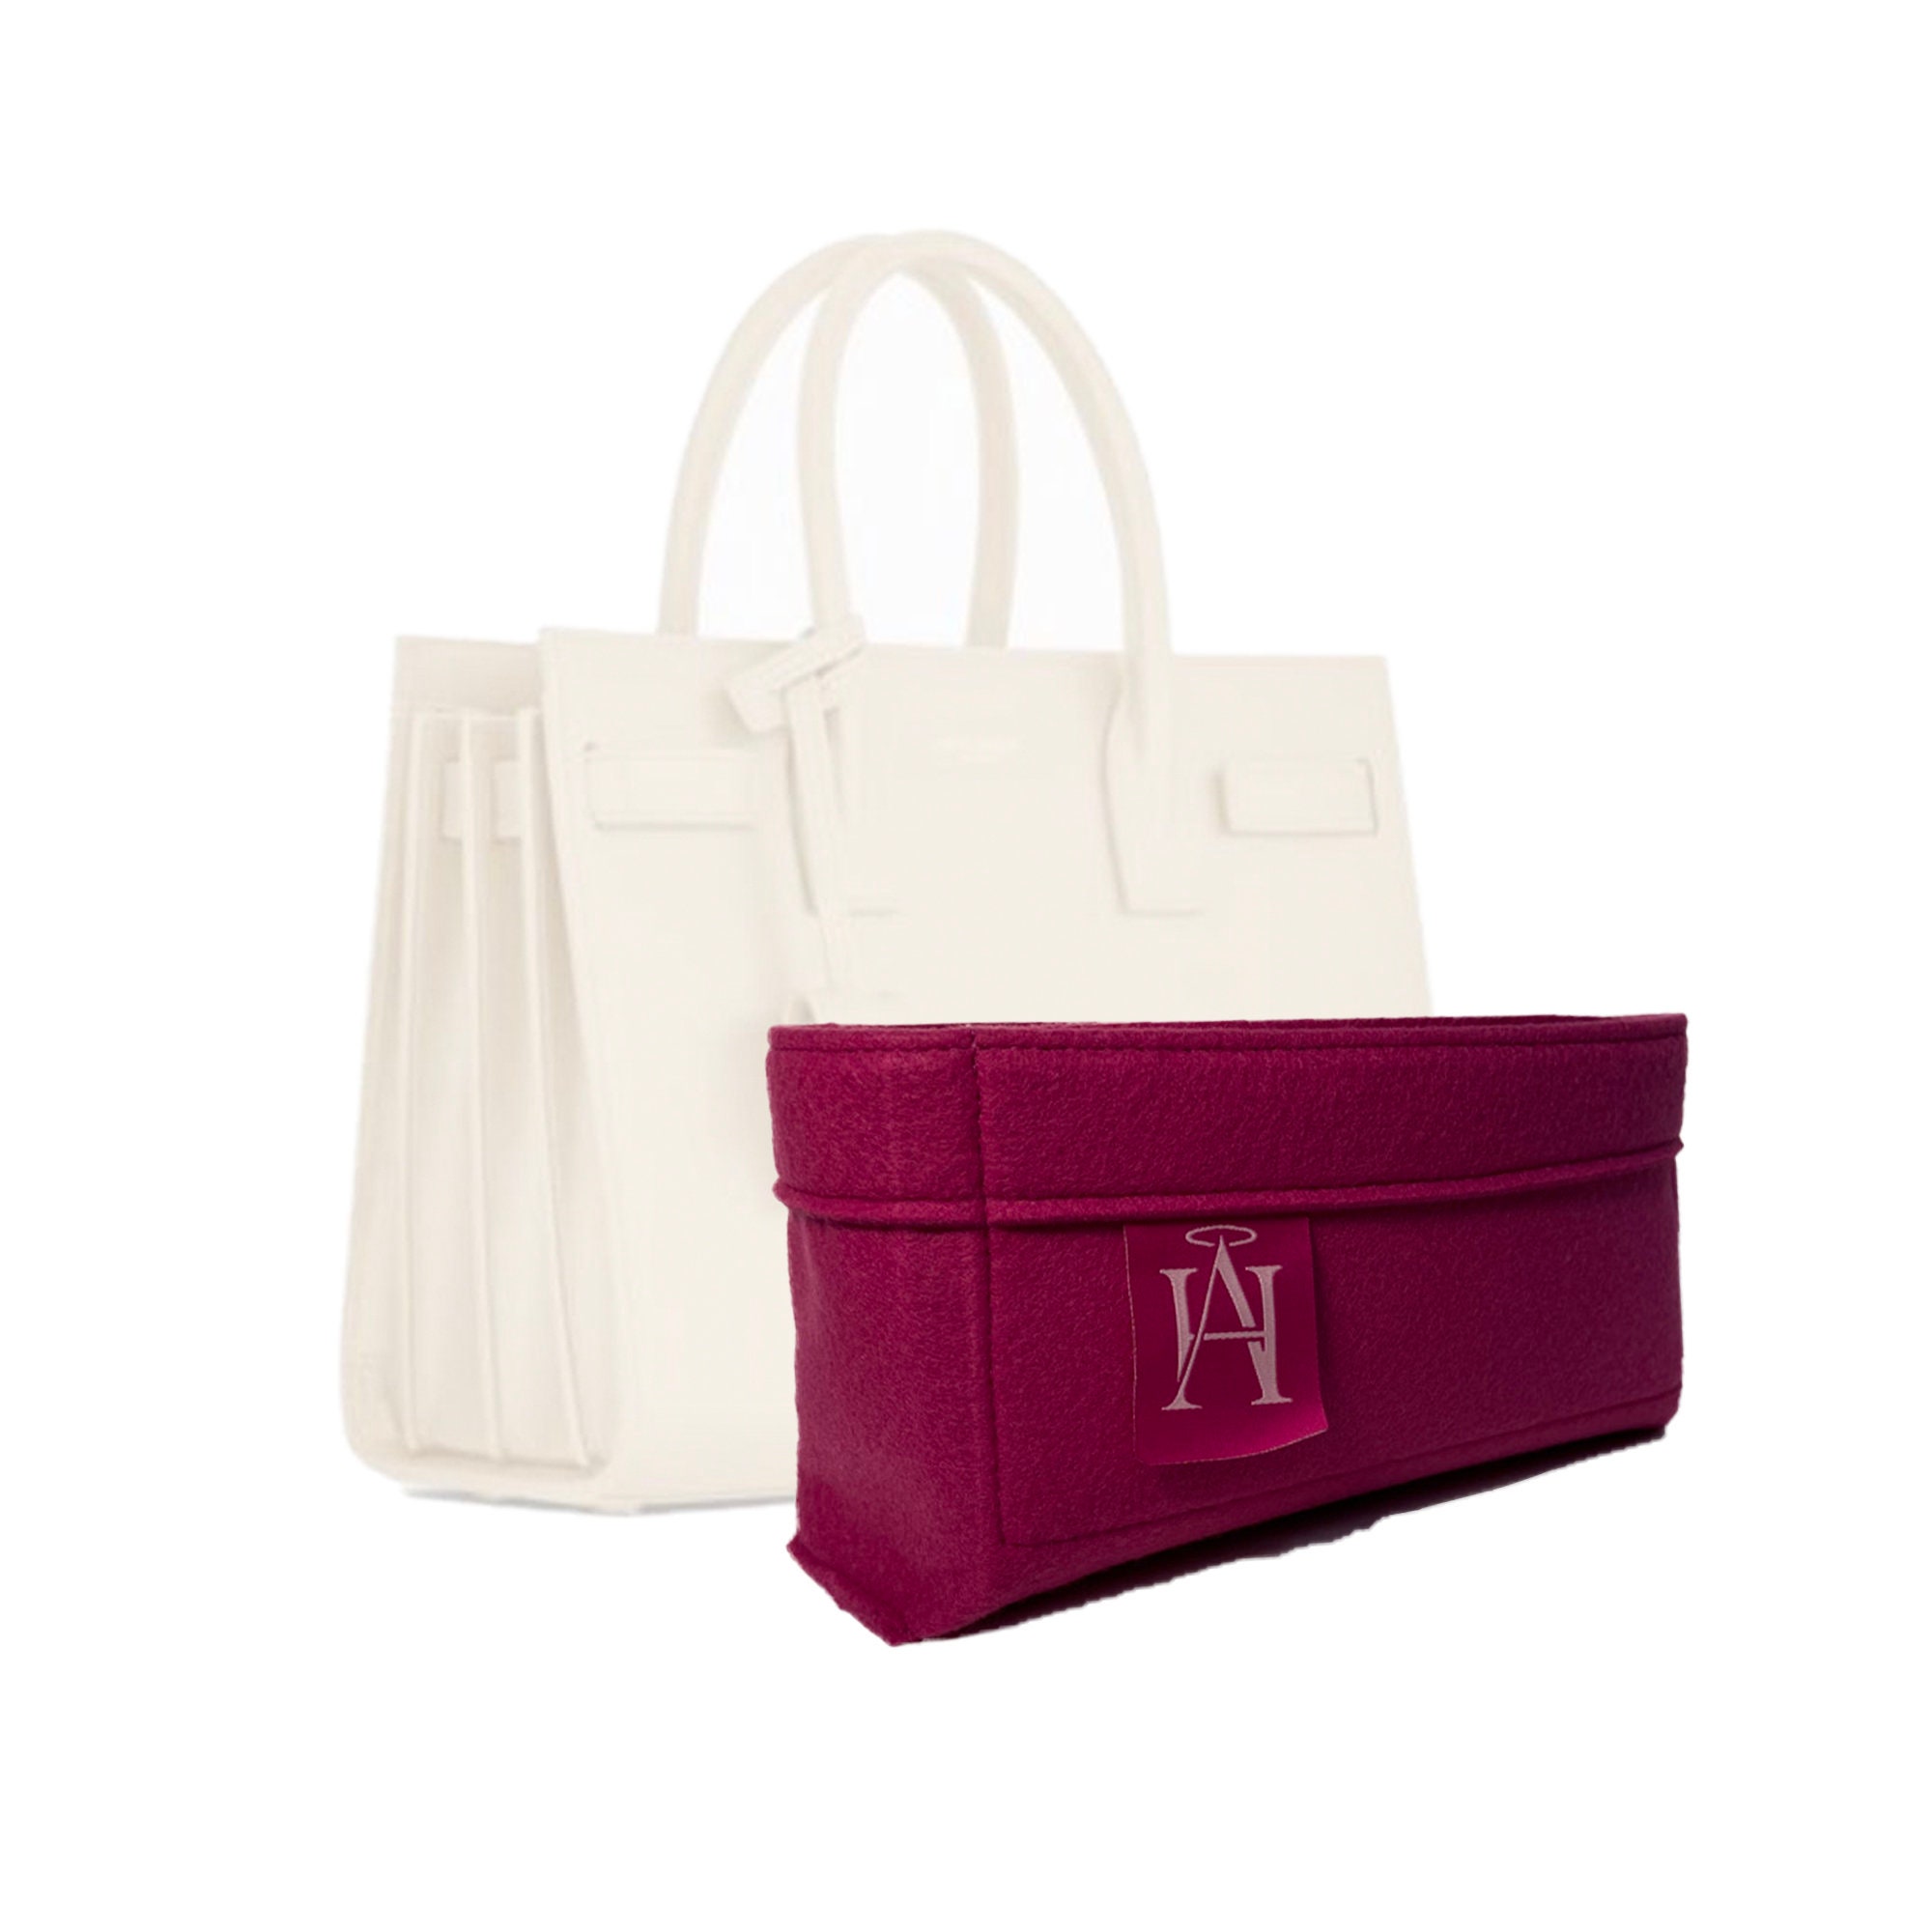  Zoomoni Premium Bag Organizer for Saint Laurent Sac De Jour  (Baby) Bag (Handmade/20 Color Options) [Purse Organiser, Liner, Insert,  Shaper] : Handmade Products